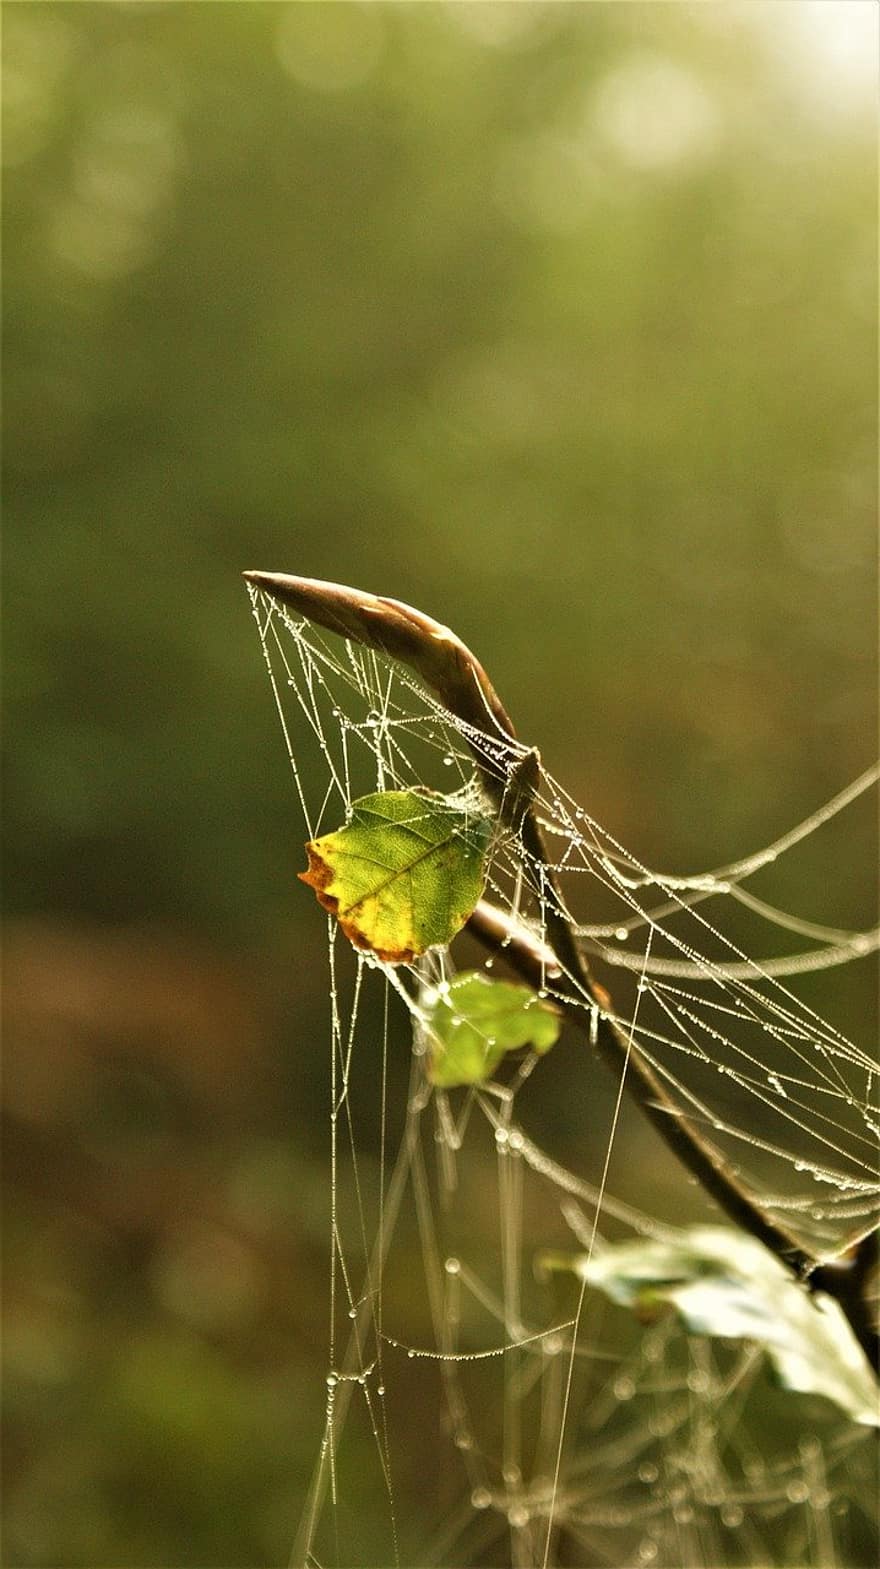 spider web, cobweb, dew drops, nature, close-up, leaf, macro, spider, outdoors, autumn, plant